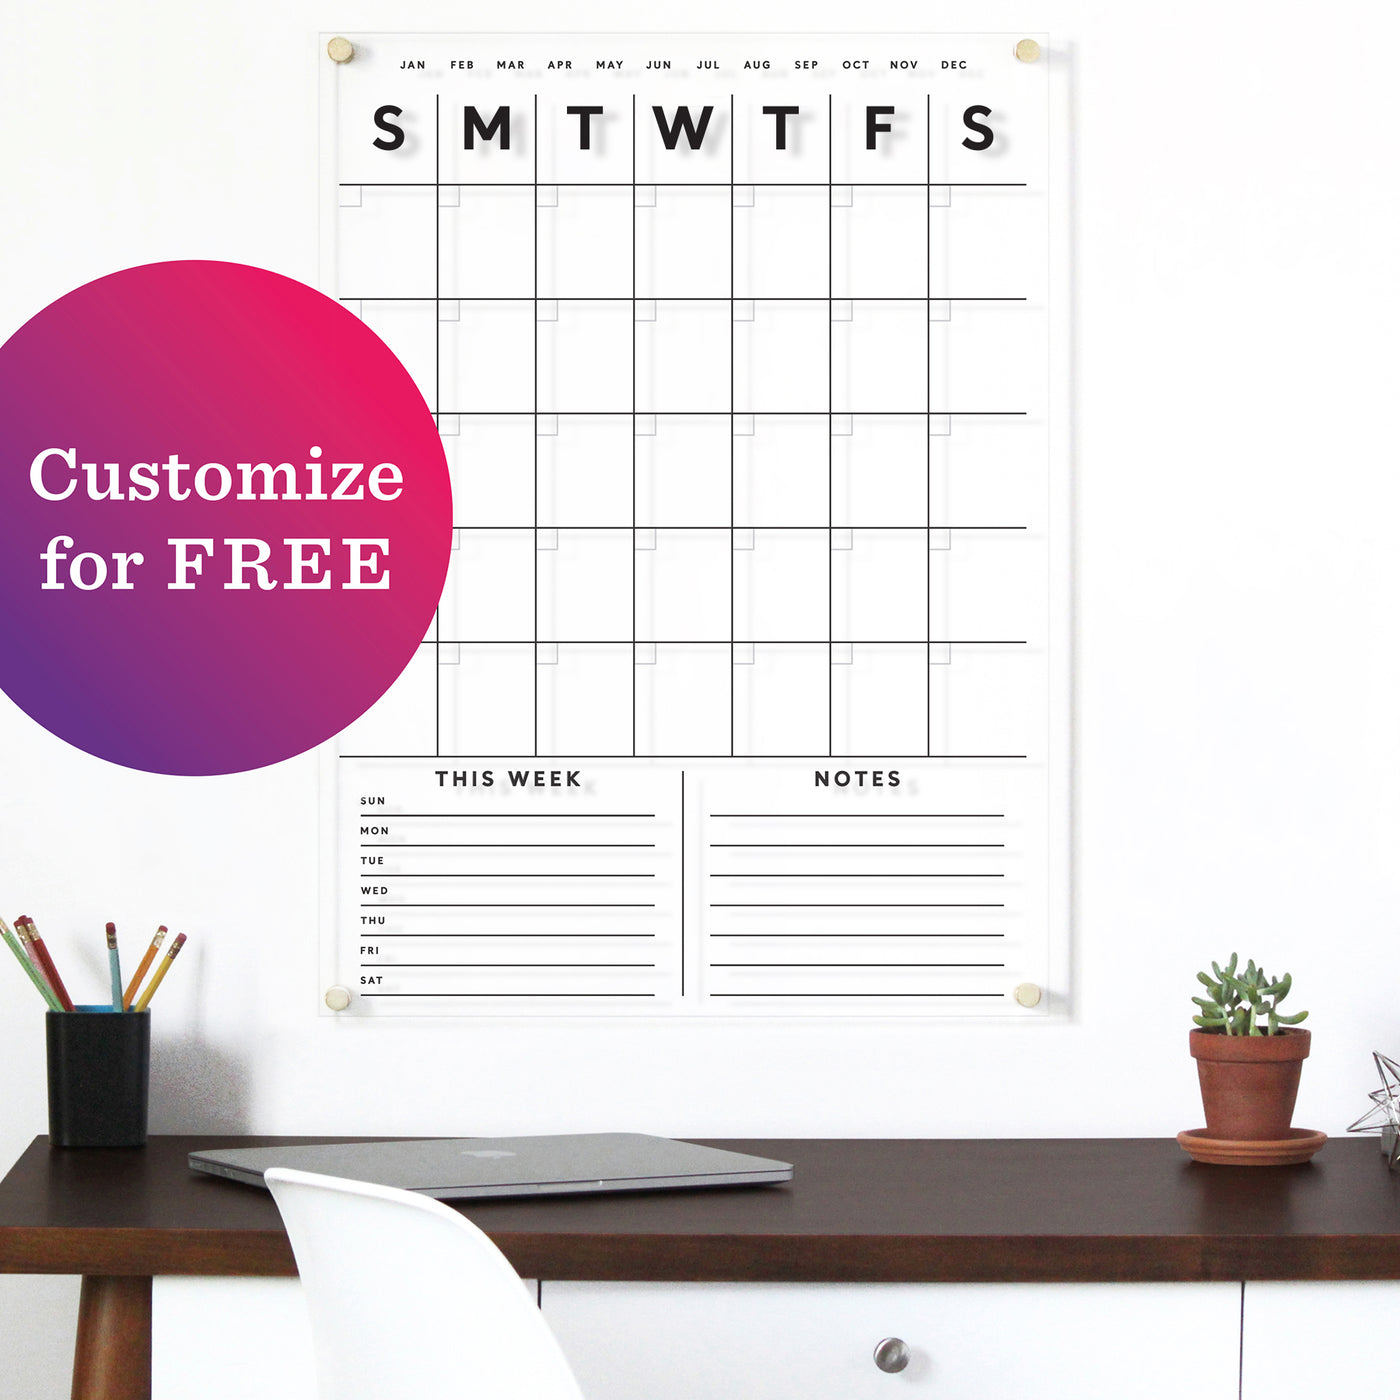 Acrylic Calendar with customizable bottom section